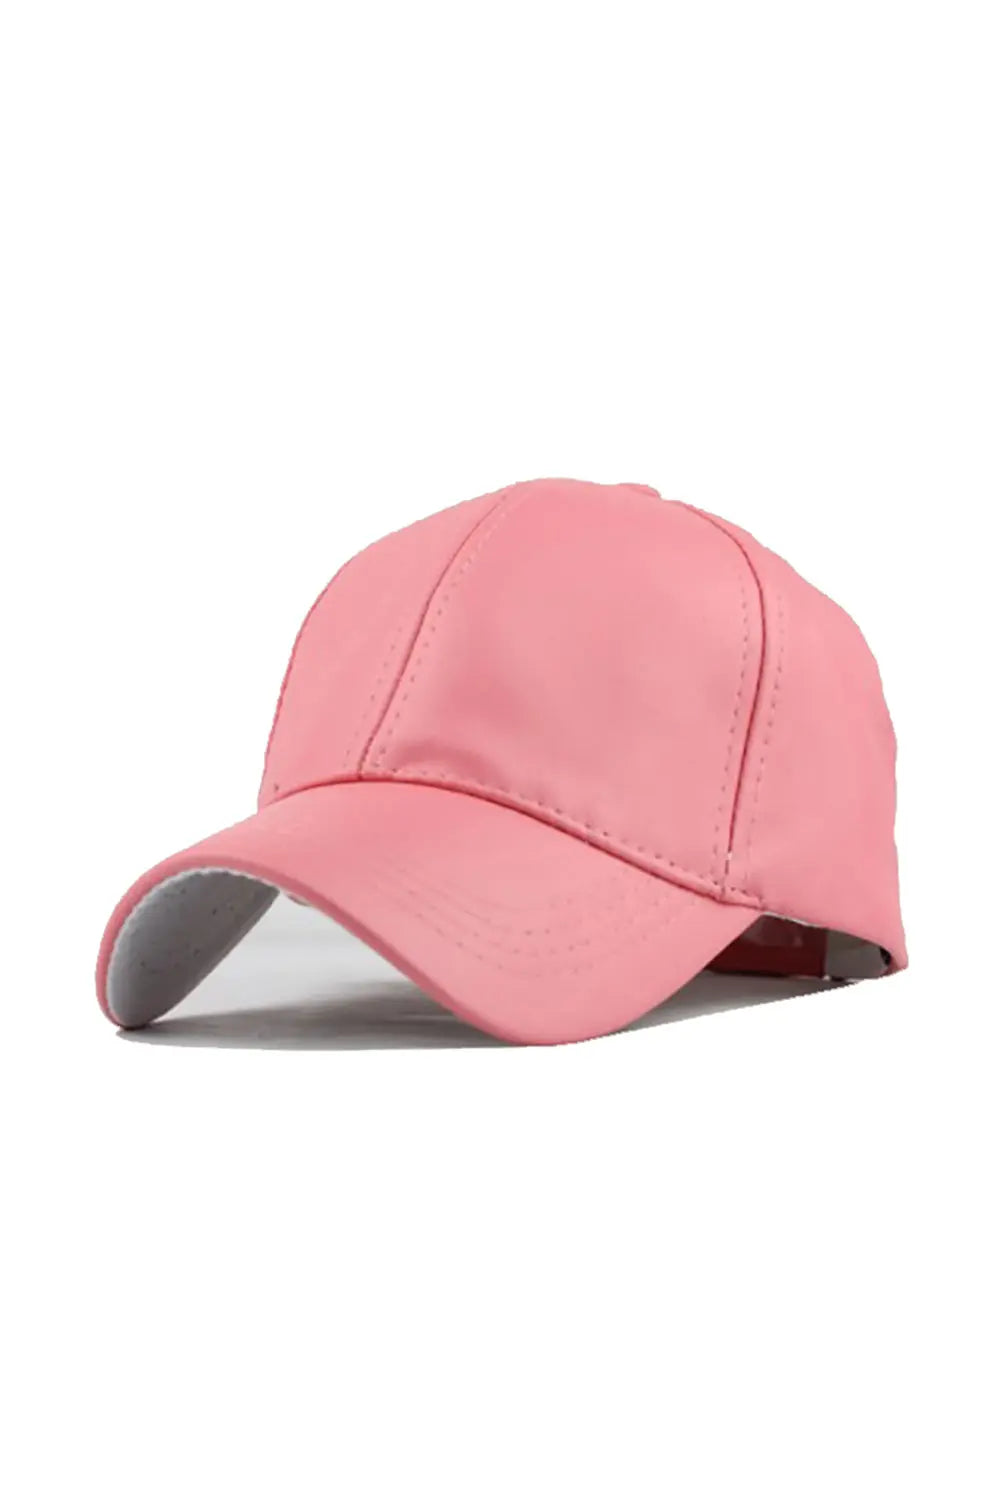 Leather Baseball Cap - Pink - Strange-Clothes